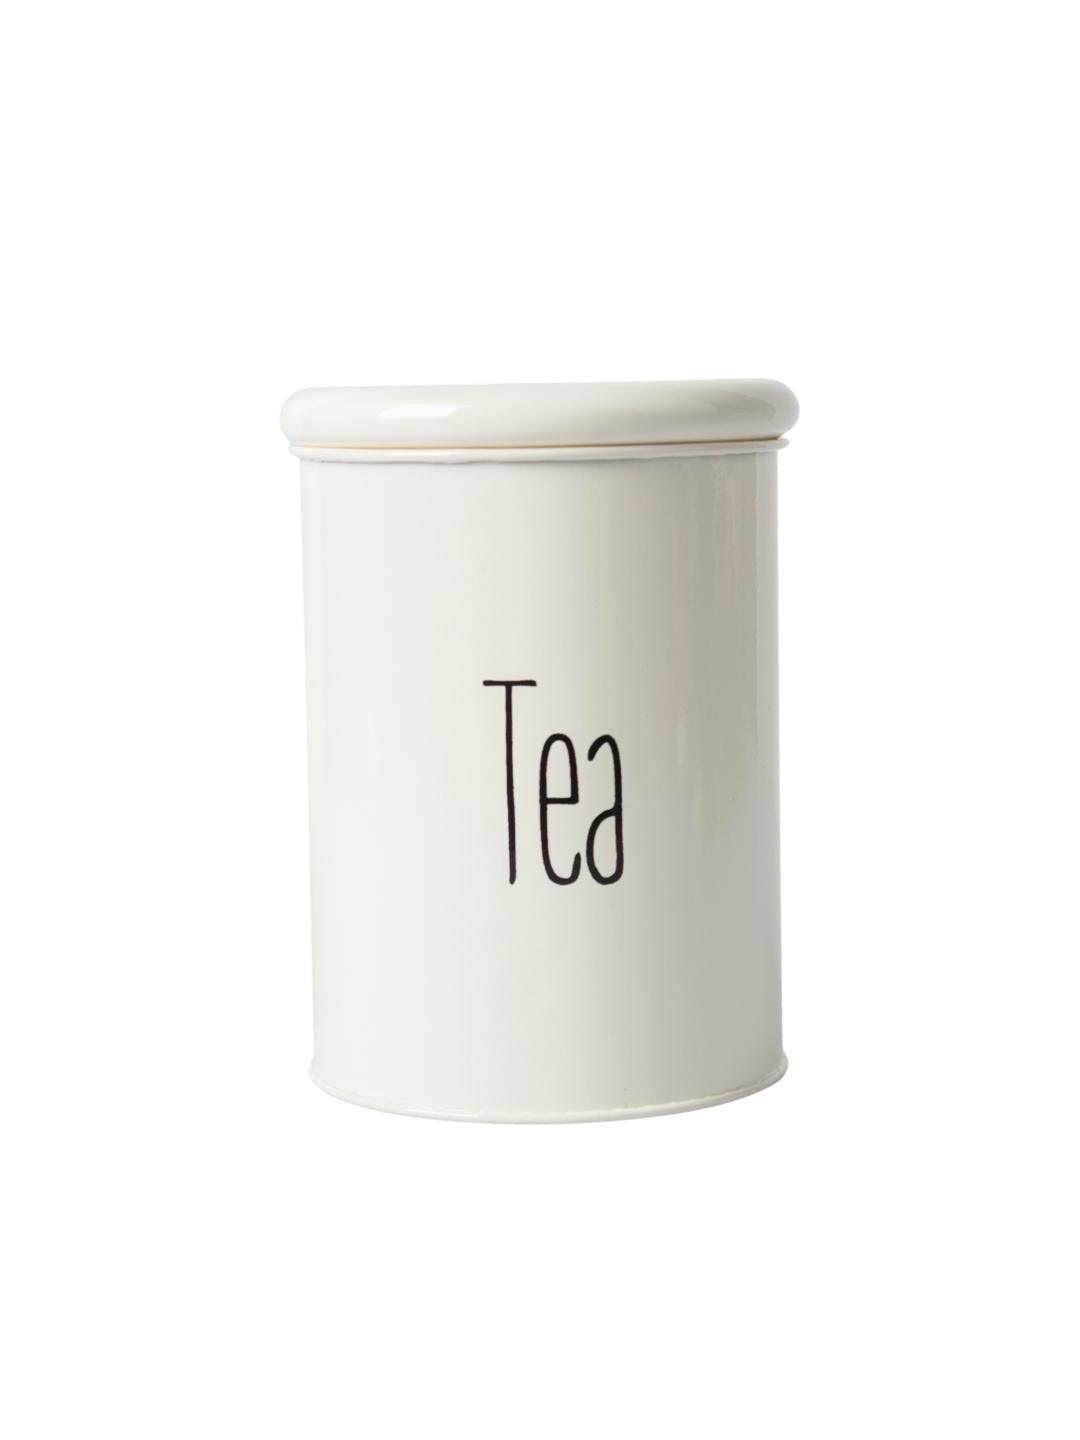 Tea & Sugar Jar (Each 900 Ml) +  Biscuits & Namkeen Jar (Each 1700 Ml) - White, Set Of 4